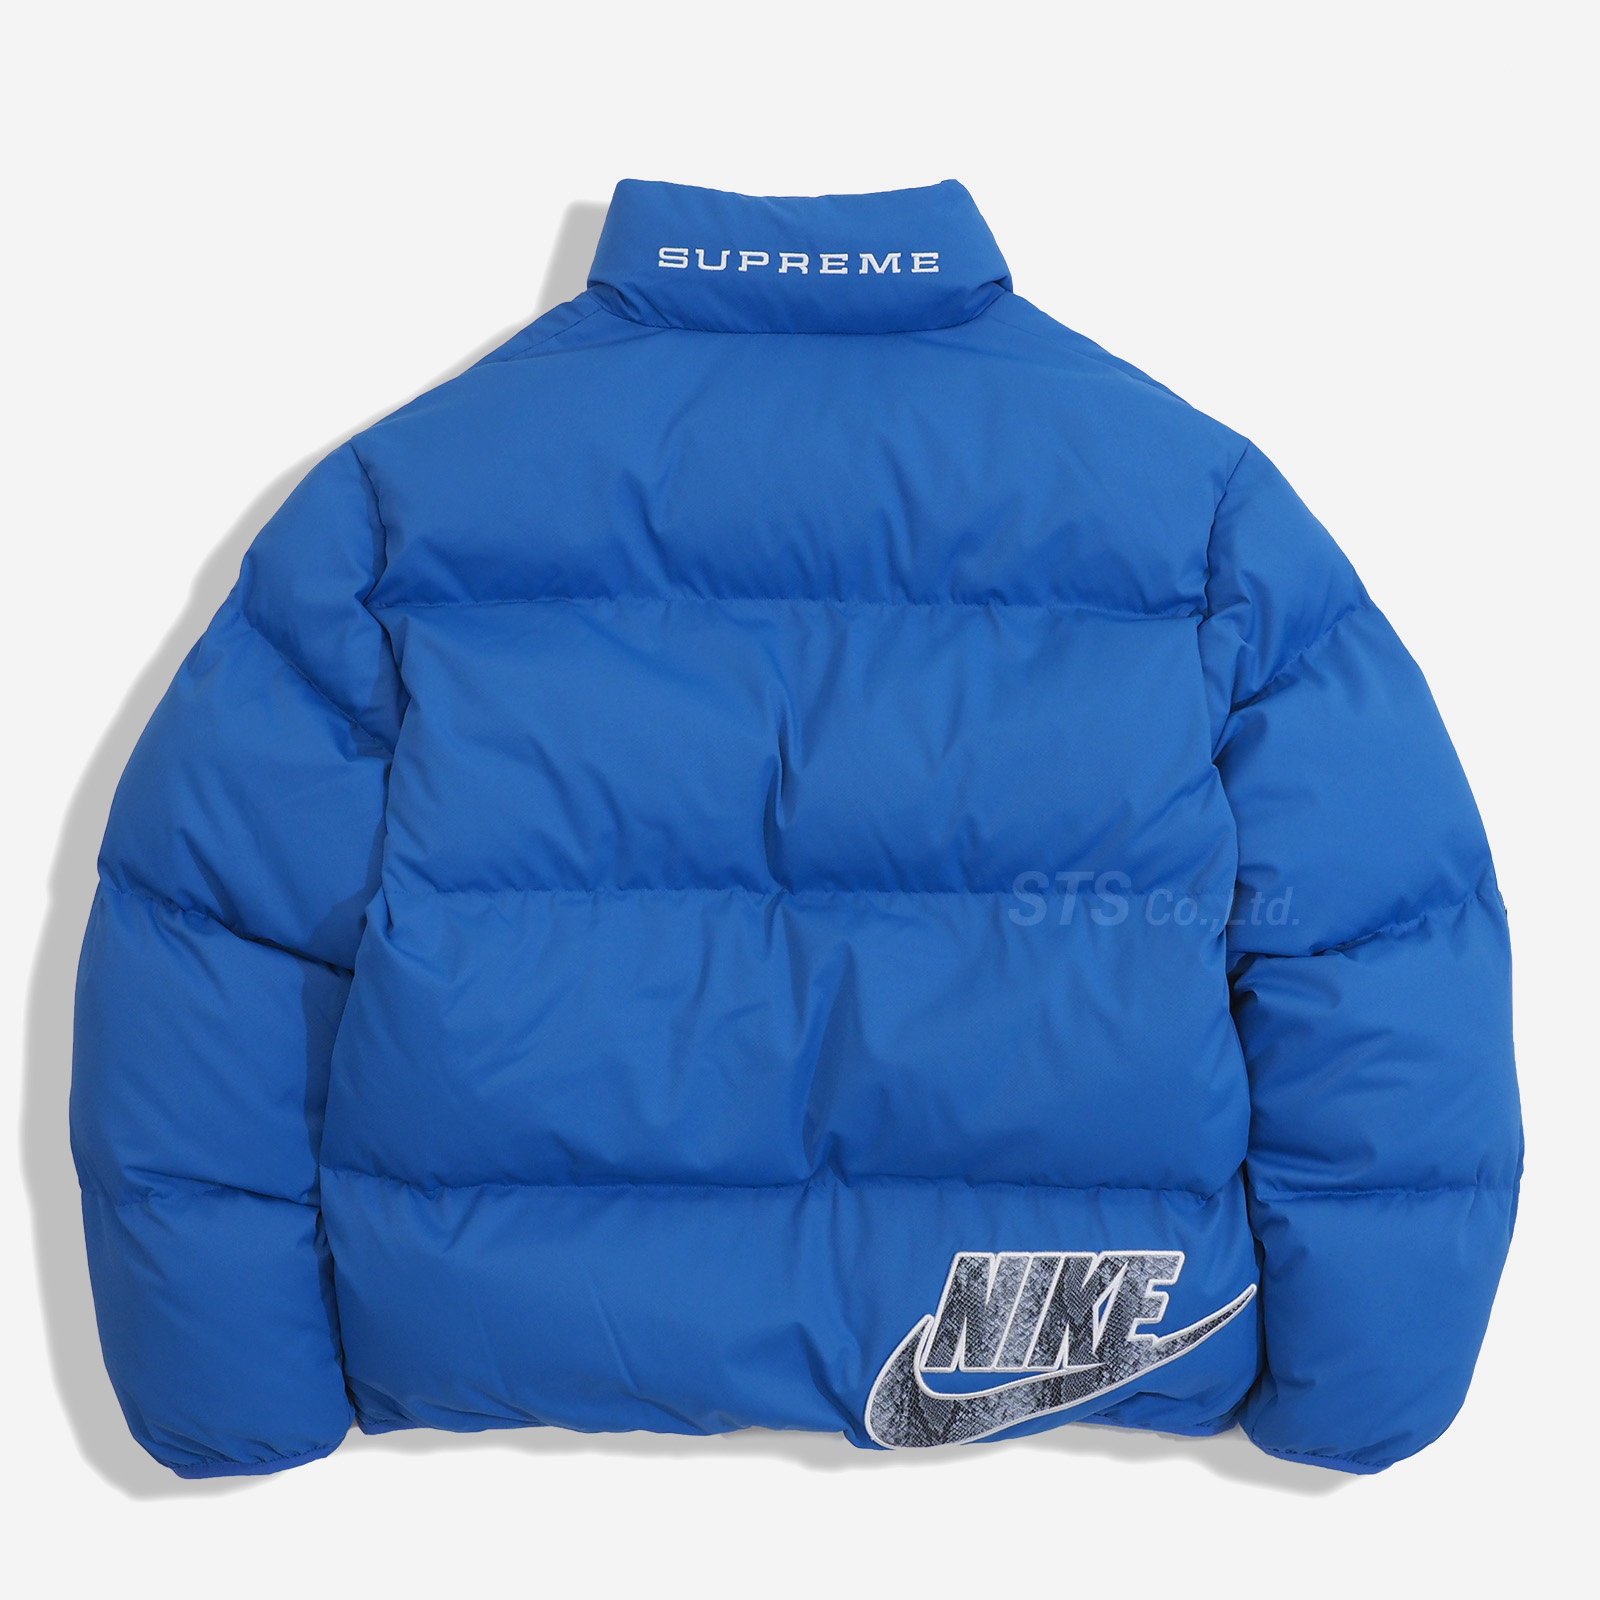 Supreme/Nike Reversible Puffy Jacket - ParkSIDER